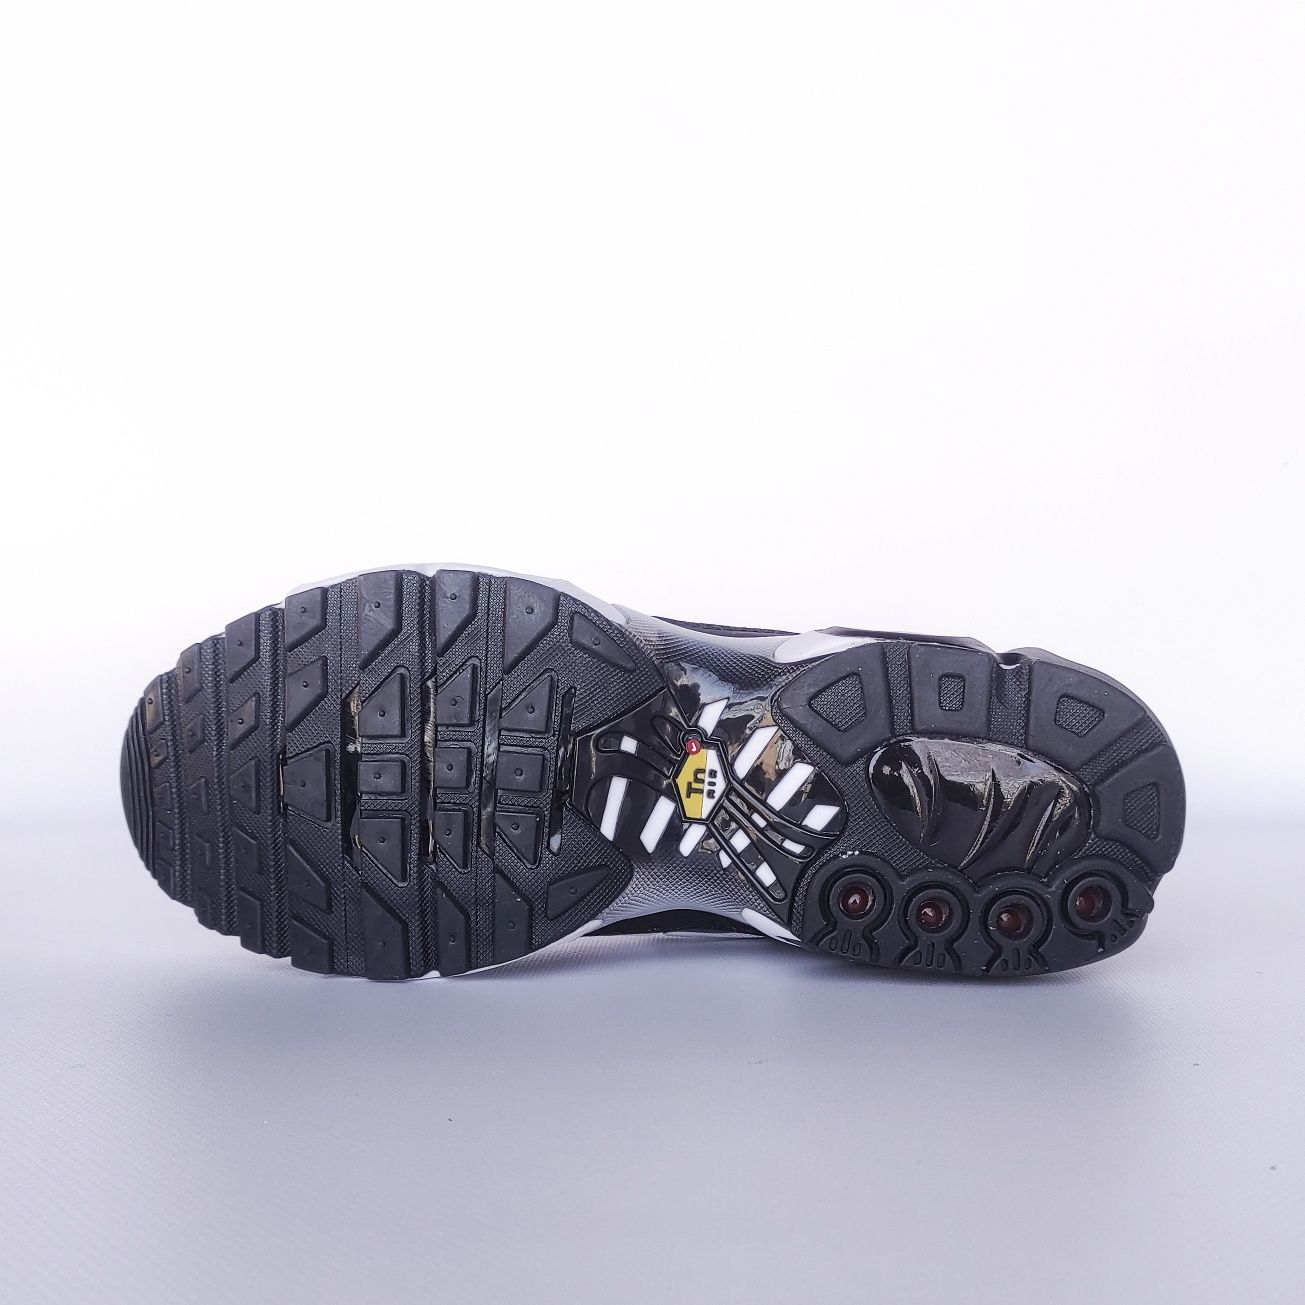 Nike Air Max TN Plus Black Whitе
Виробник: В'єтнам
разміри: 40 - 46
ма